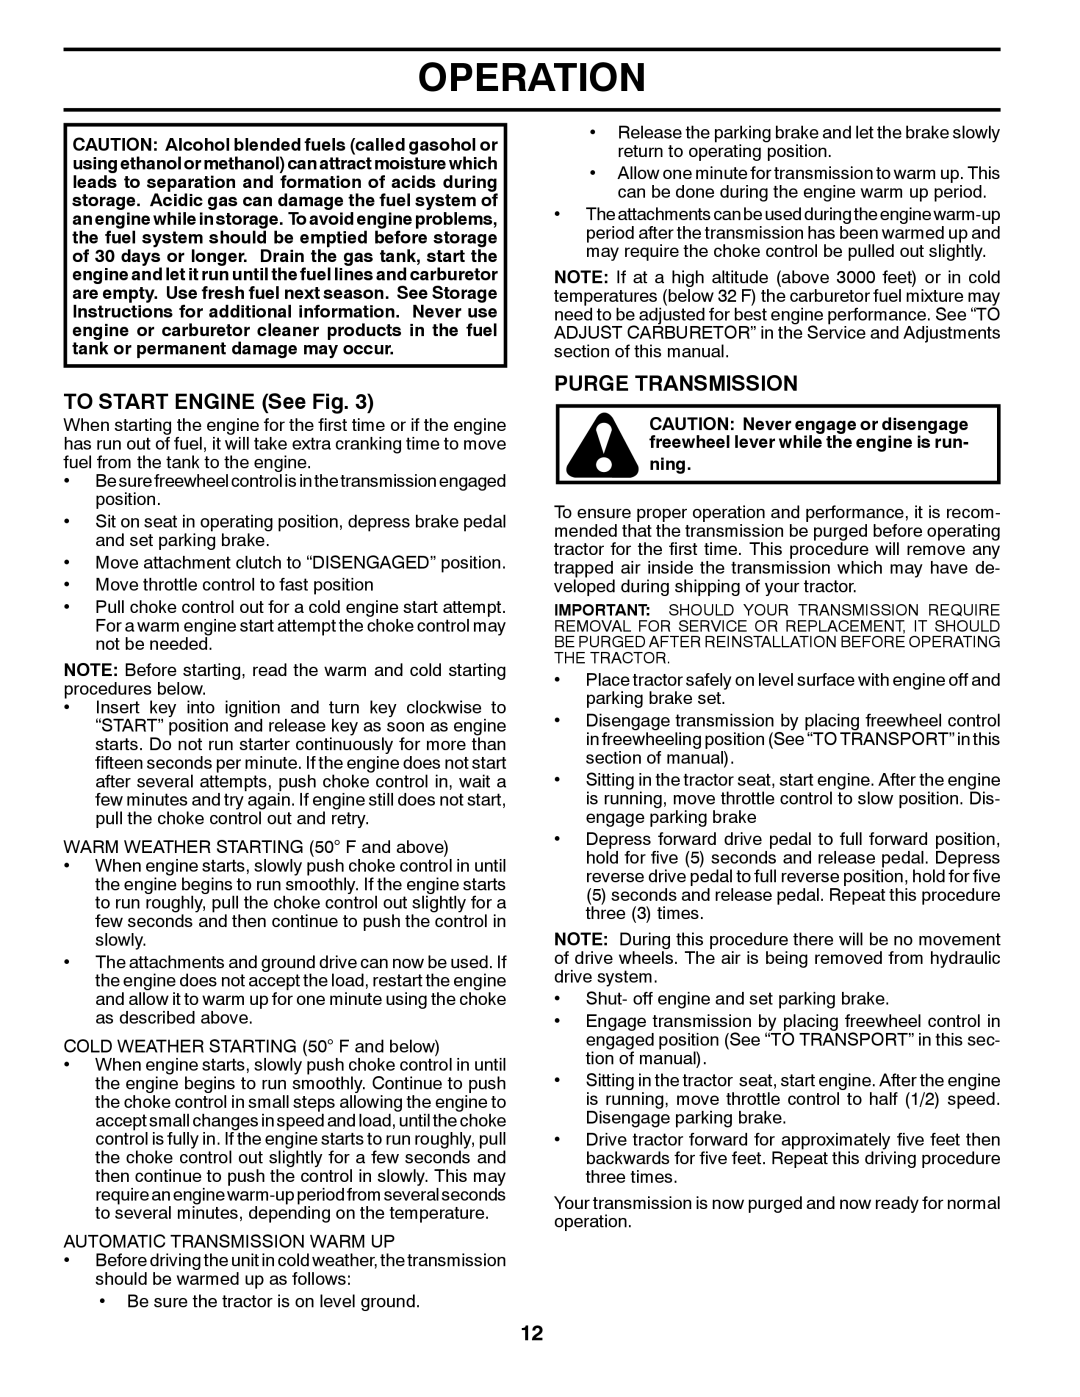 Husqvarna YTH2146XP owner manual TO START ENGINE See Fig, Purge Transmission, Operation, ning 